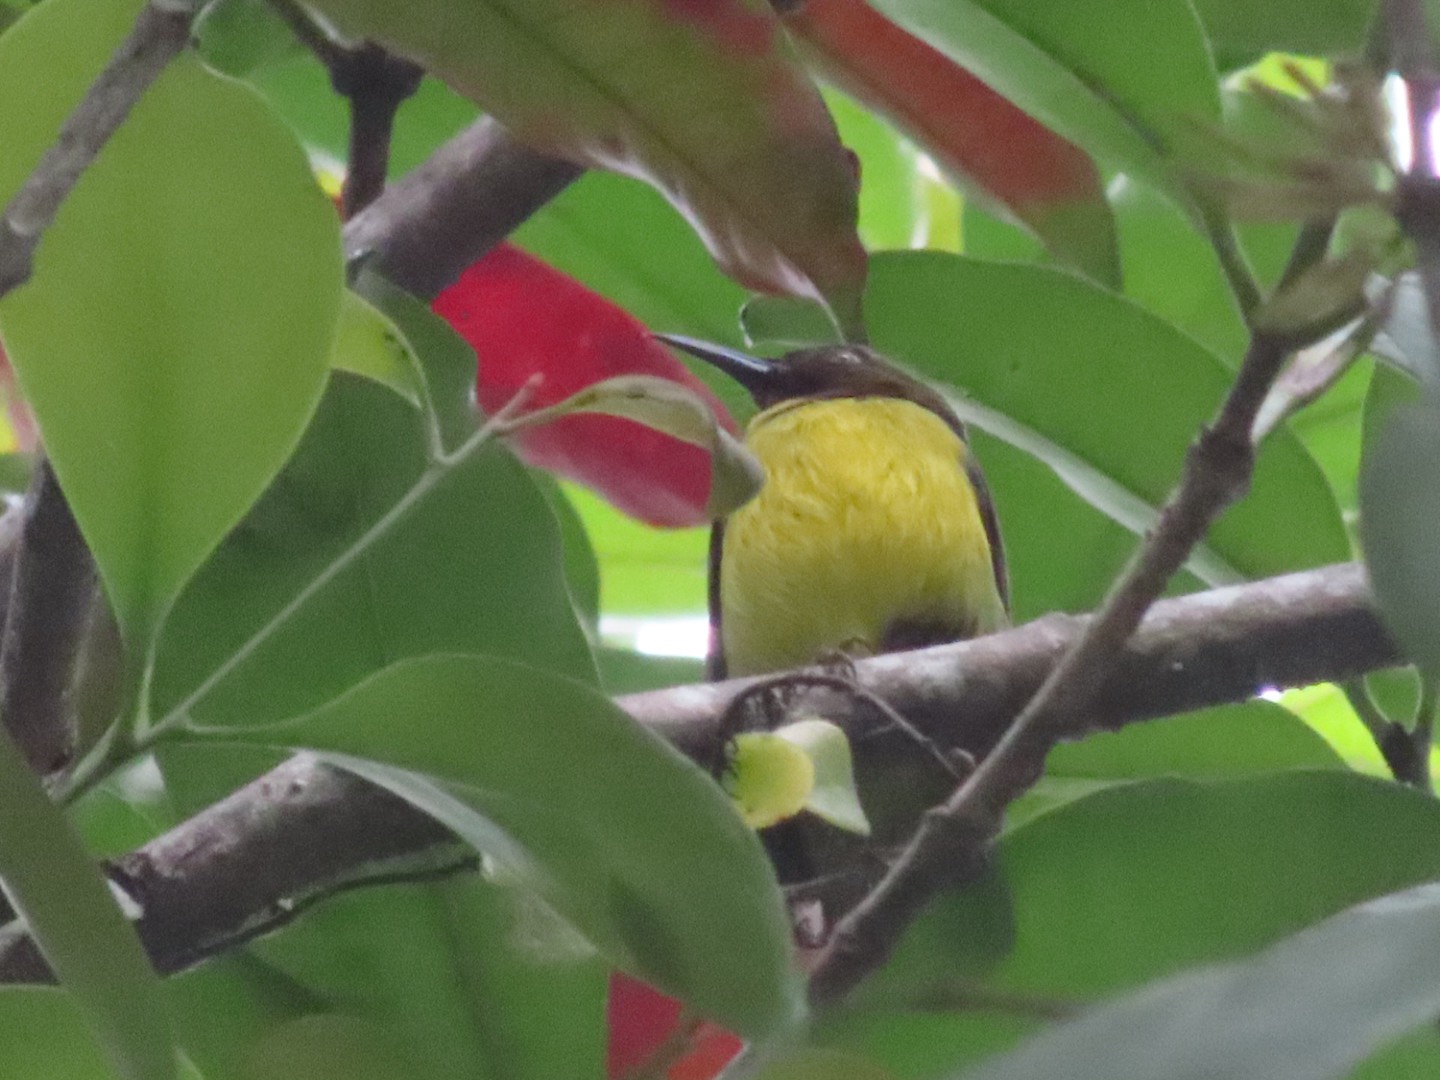 Brown-throated sunbird